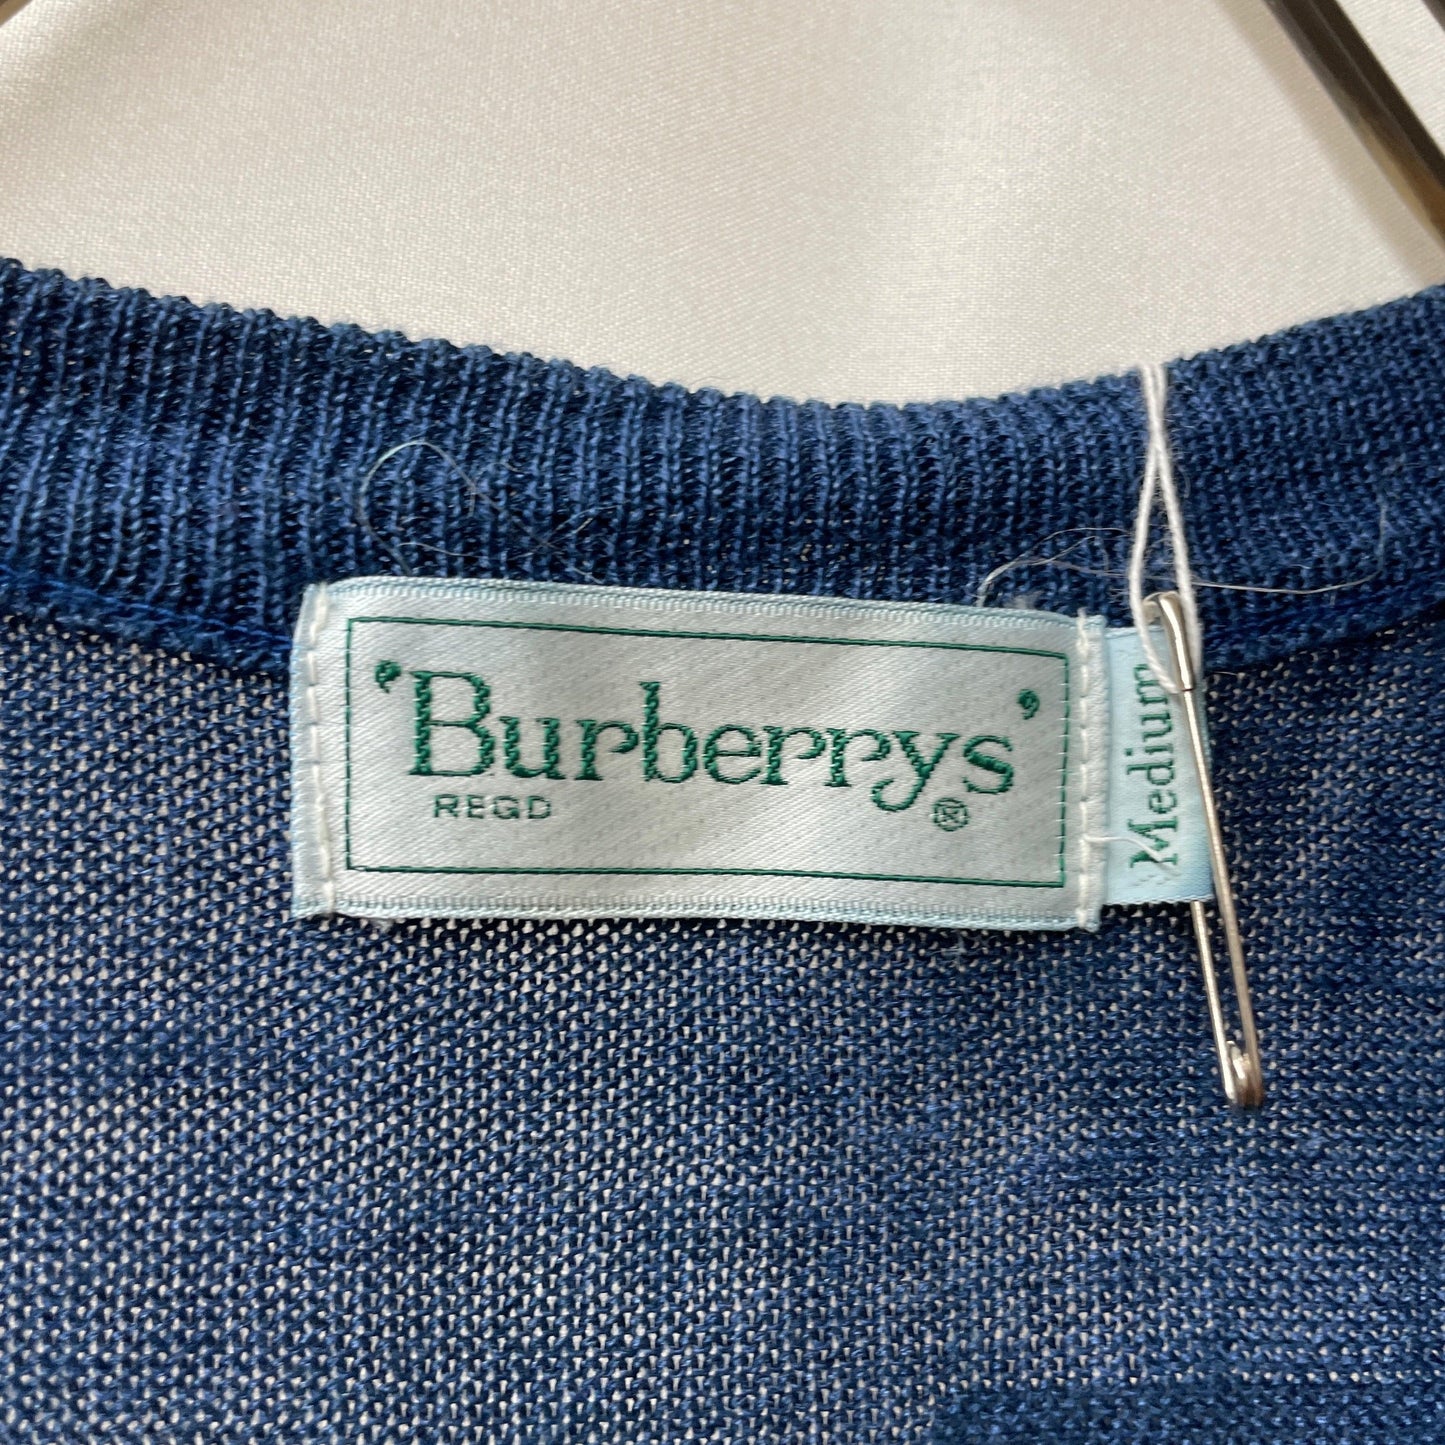 Burberry knit